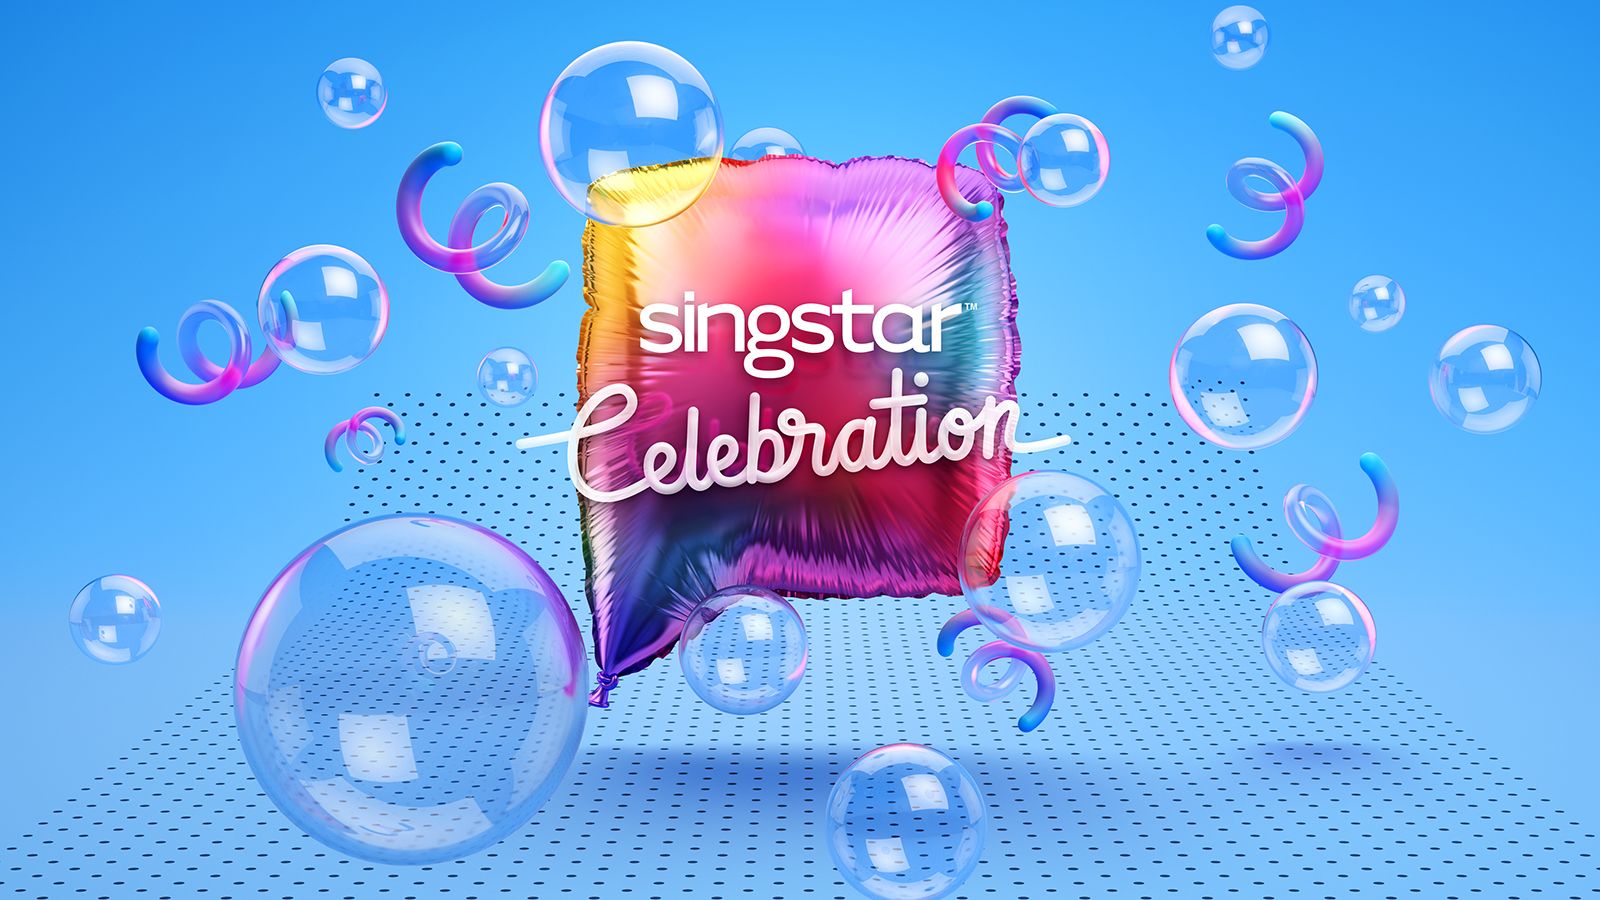 Review game SingStar Celebration